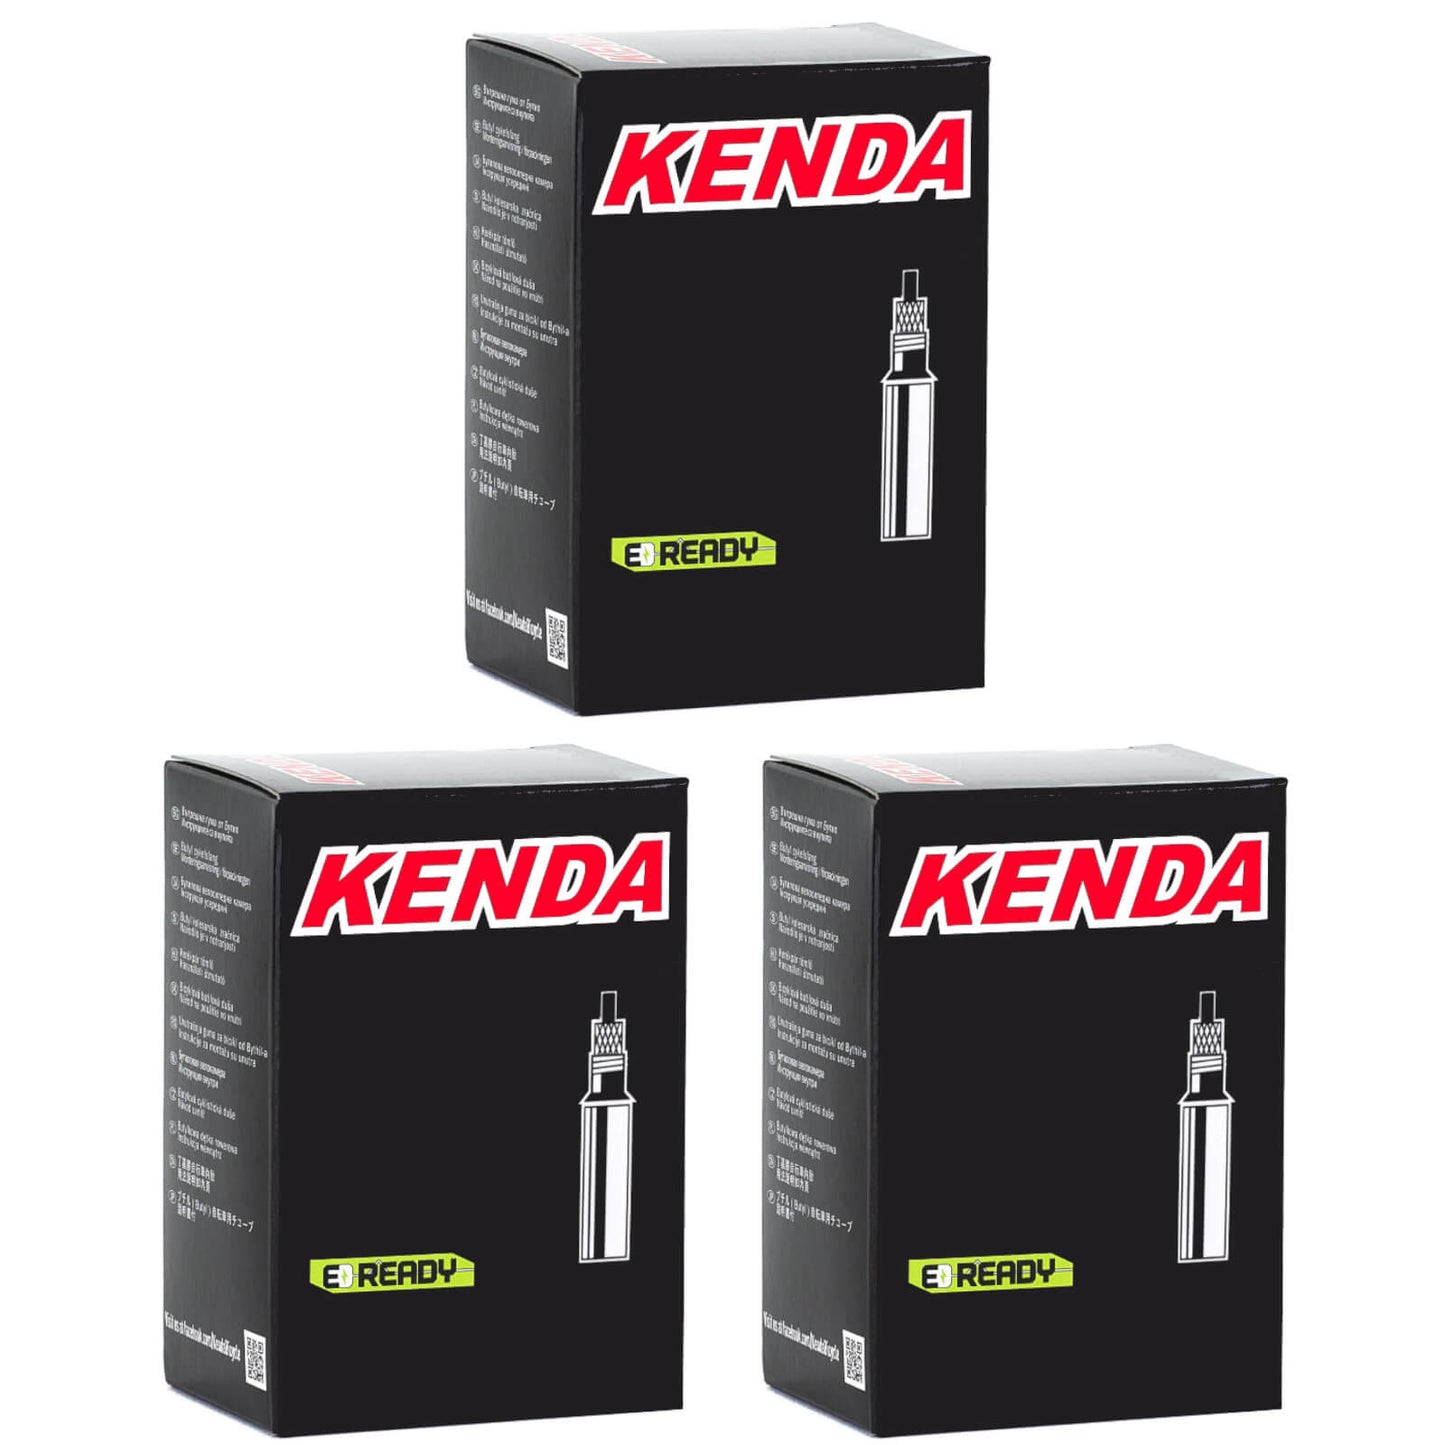 Kenda 26x2.4-2.8" 26 Inch Presta Valve Bike Inner Tube Pack of 3